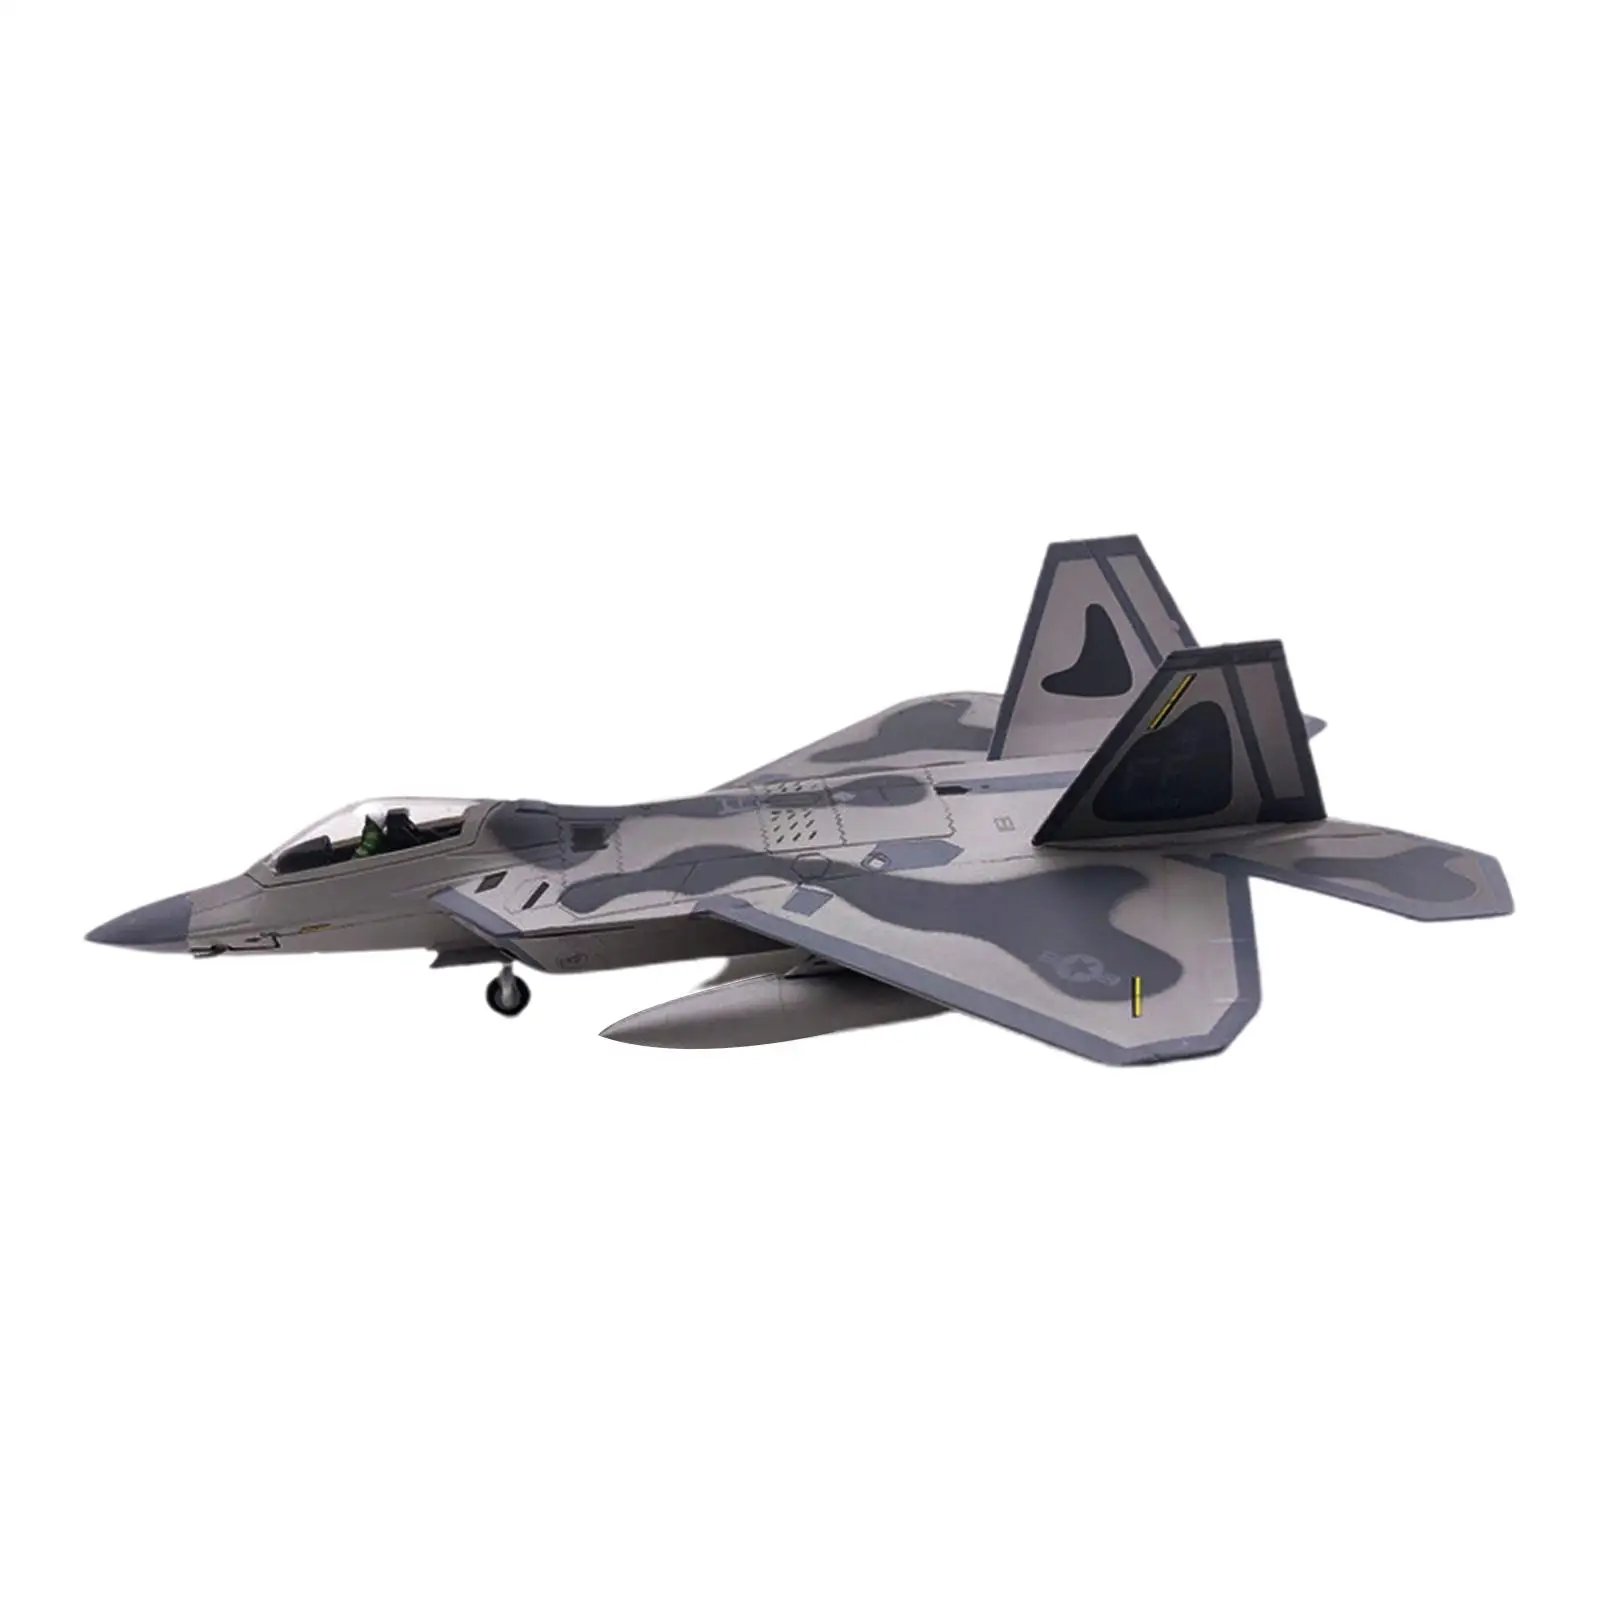 1:100 Scale American F22 Fighter Model Static Aviation Plane Metal Souvenir